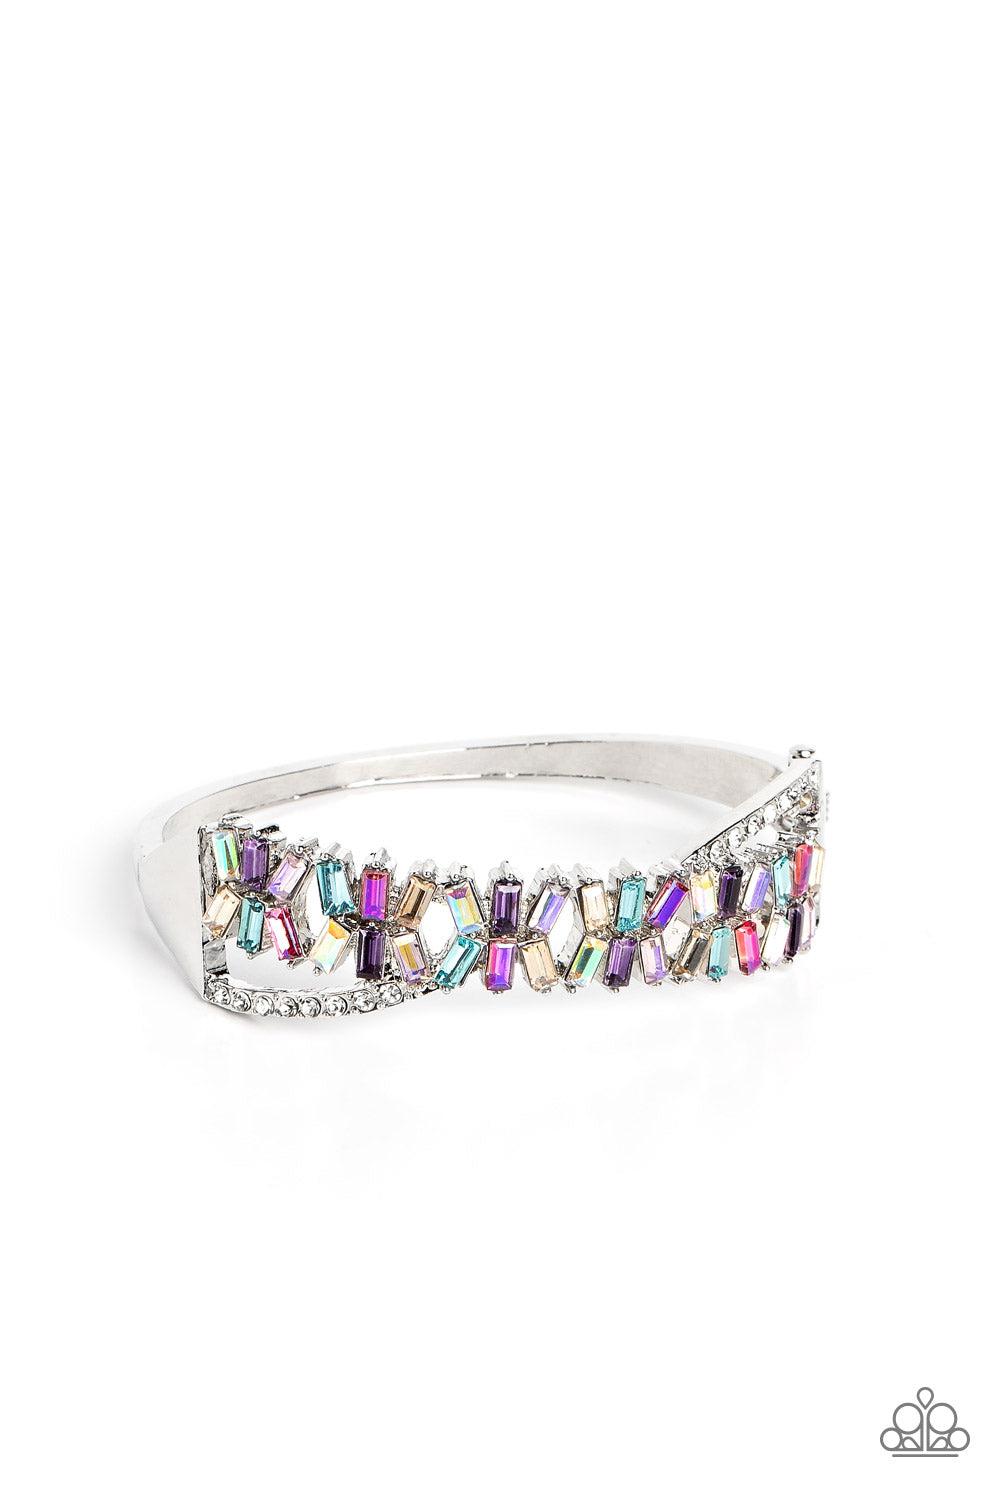 Timeless Trifecta Multi Bracelet - Paparazzi Accessories- lightbox - CarasShop.com - $5 Jewelry by Cara Jewels